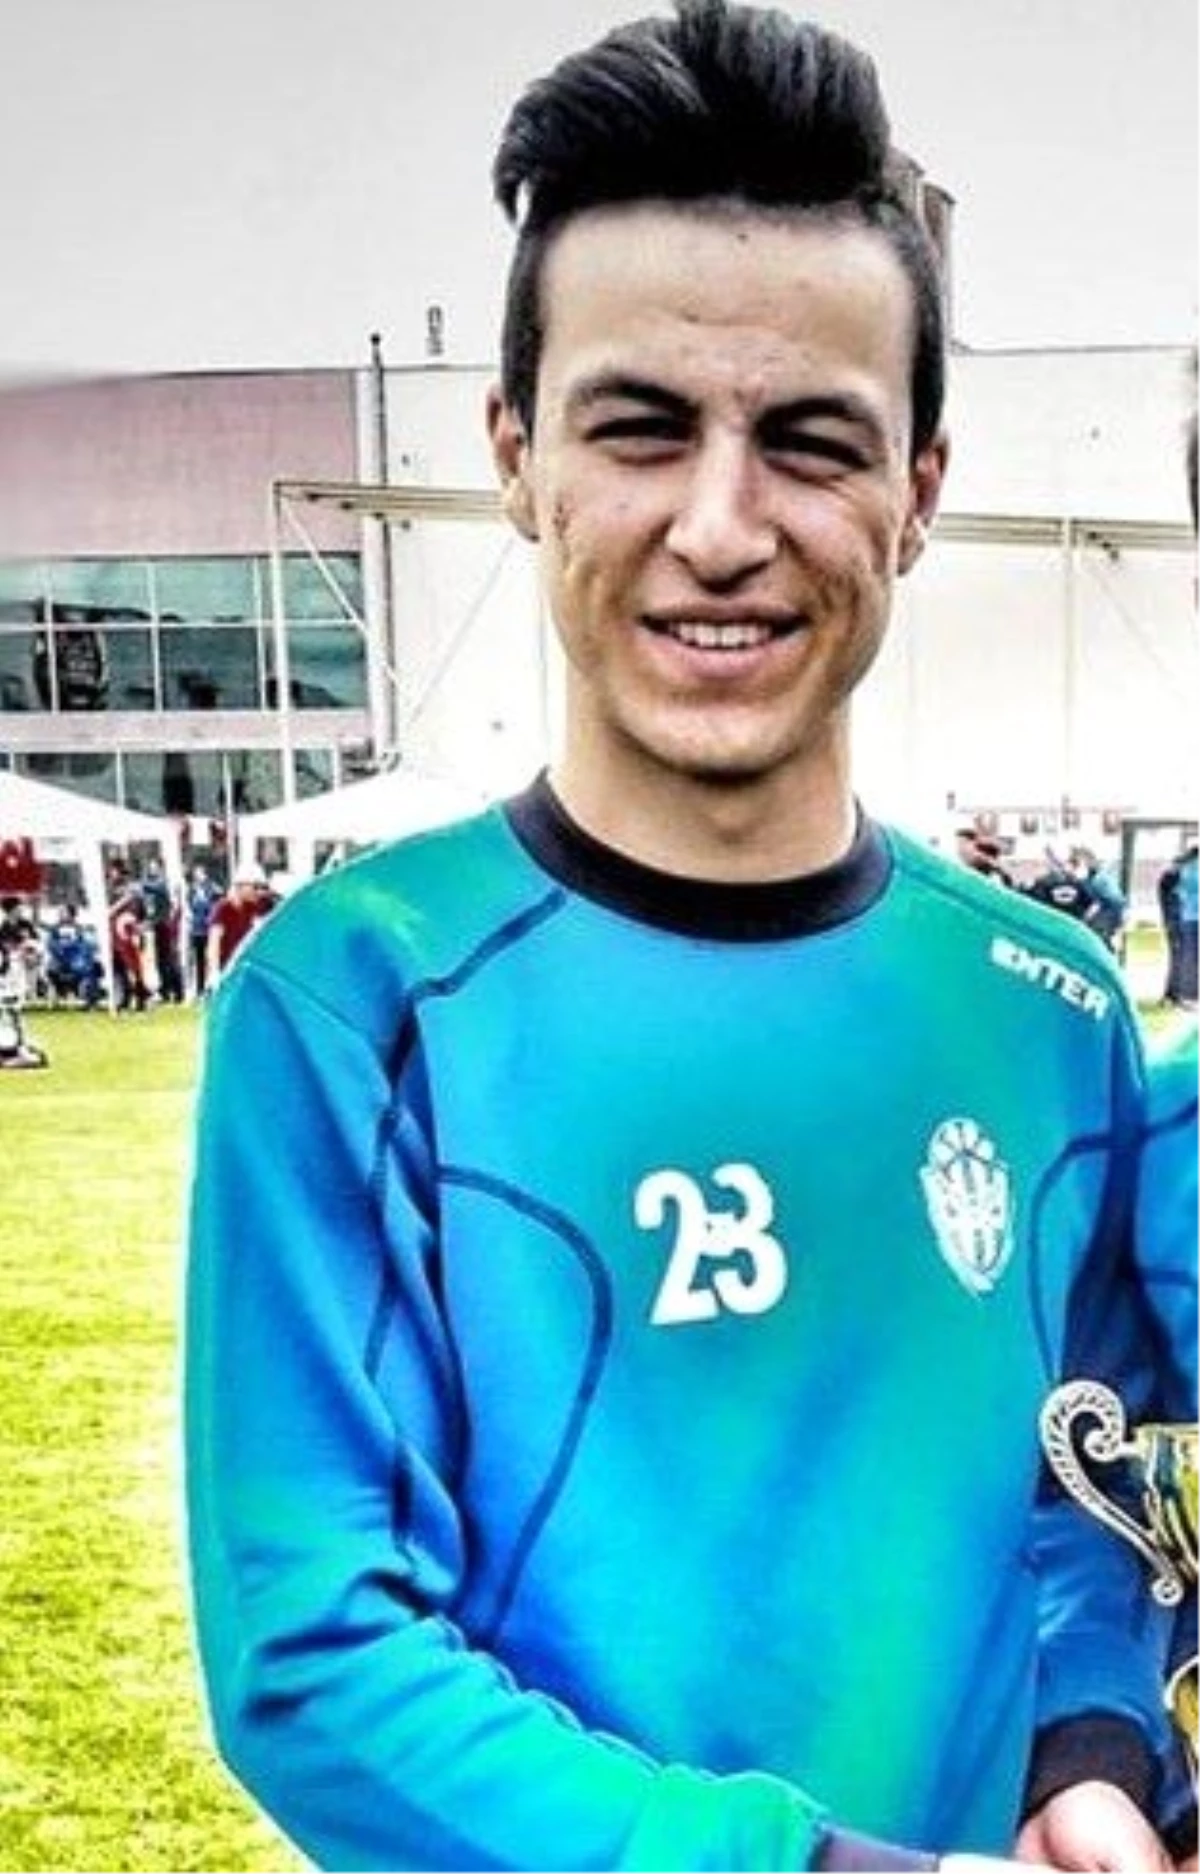 Genç futbolcu Hasan Dinçer vefat etti